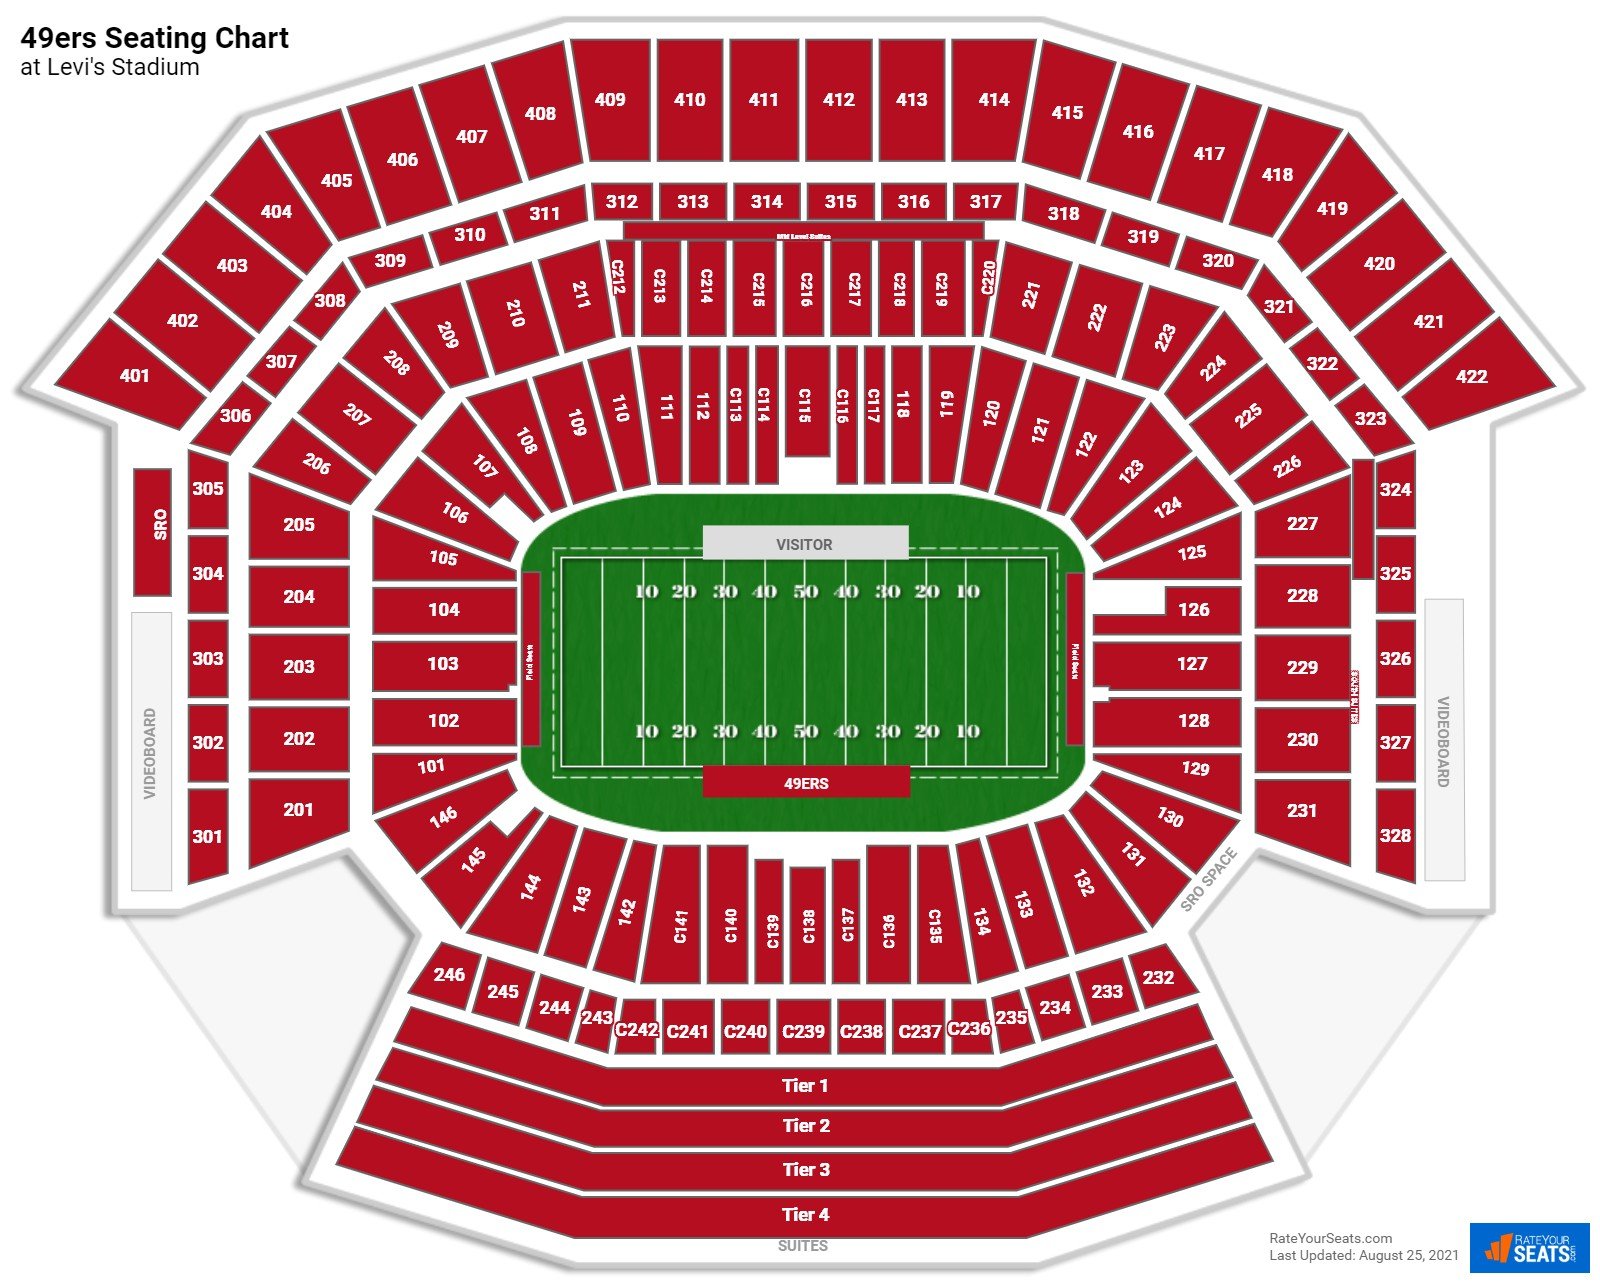 Levi's Stadium Seating Chart 